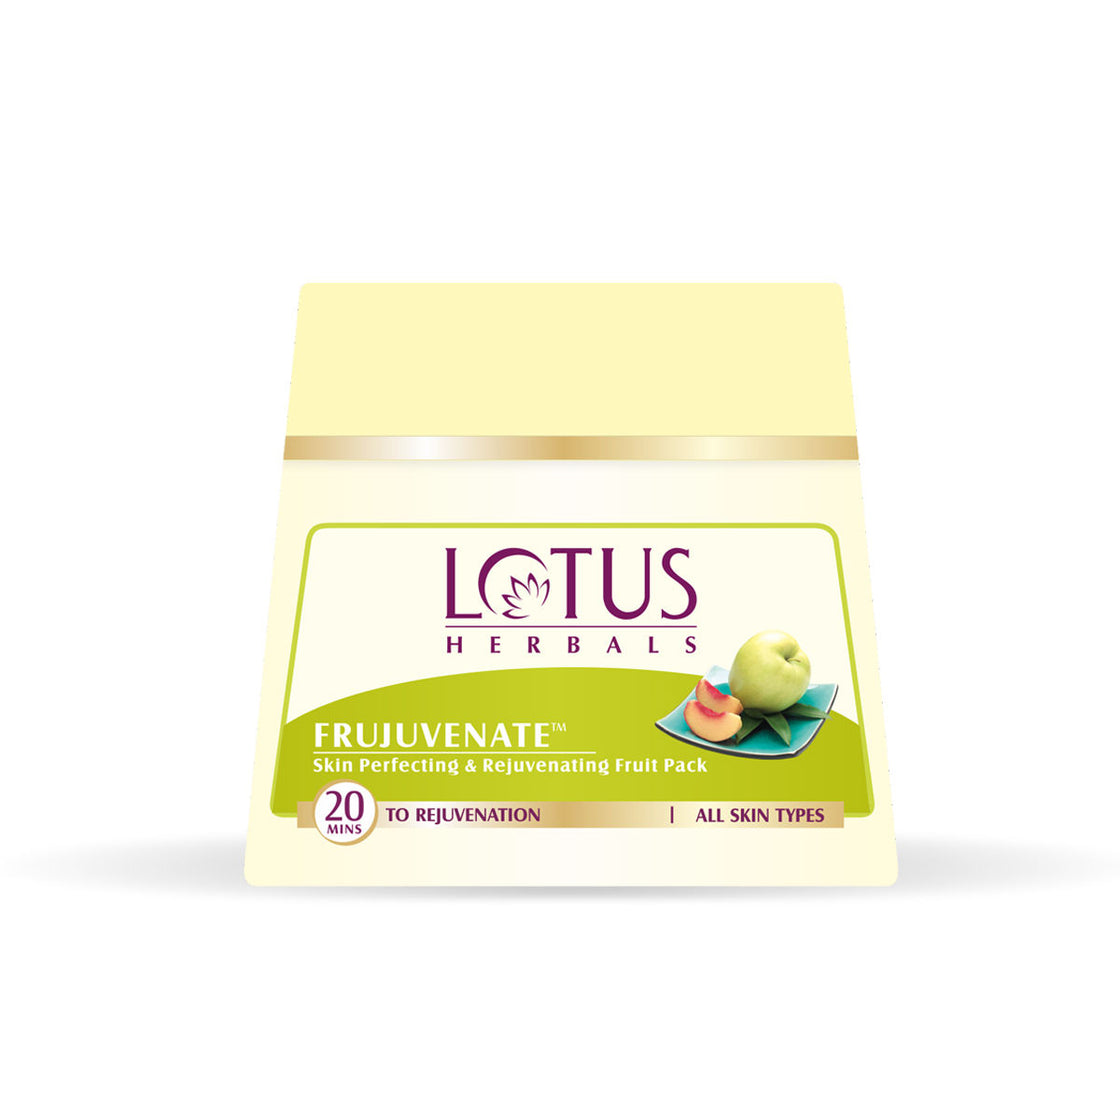 Lotus Herbals Frujuvenate Skin Perfecting & Rejuvenating Fruit Pack (350g)